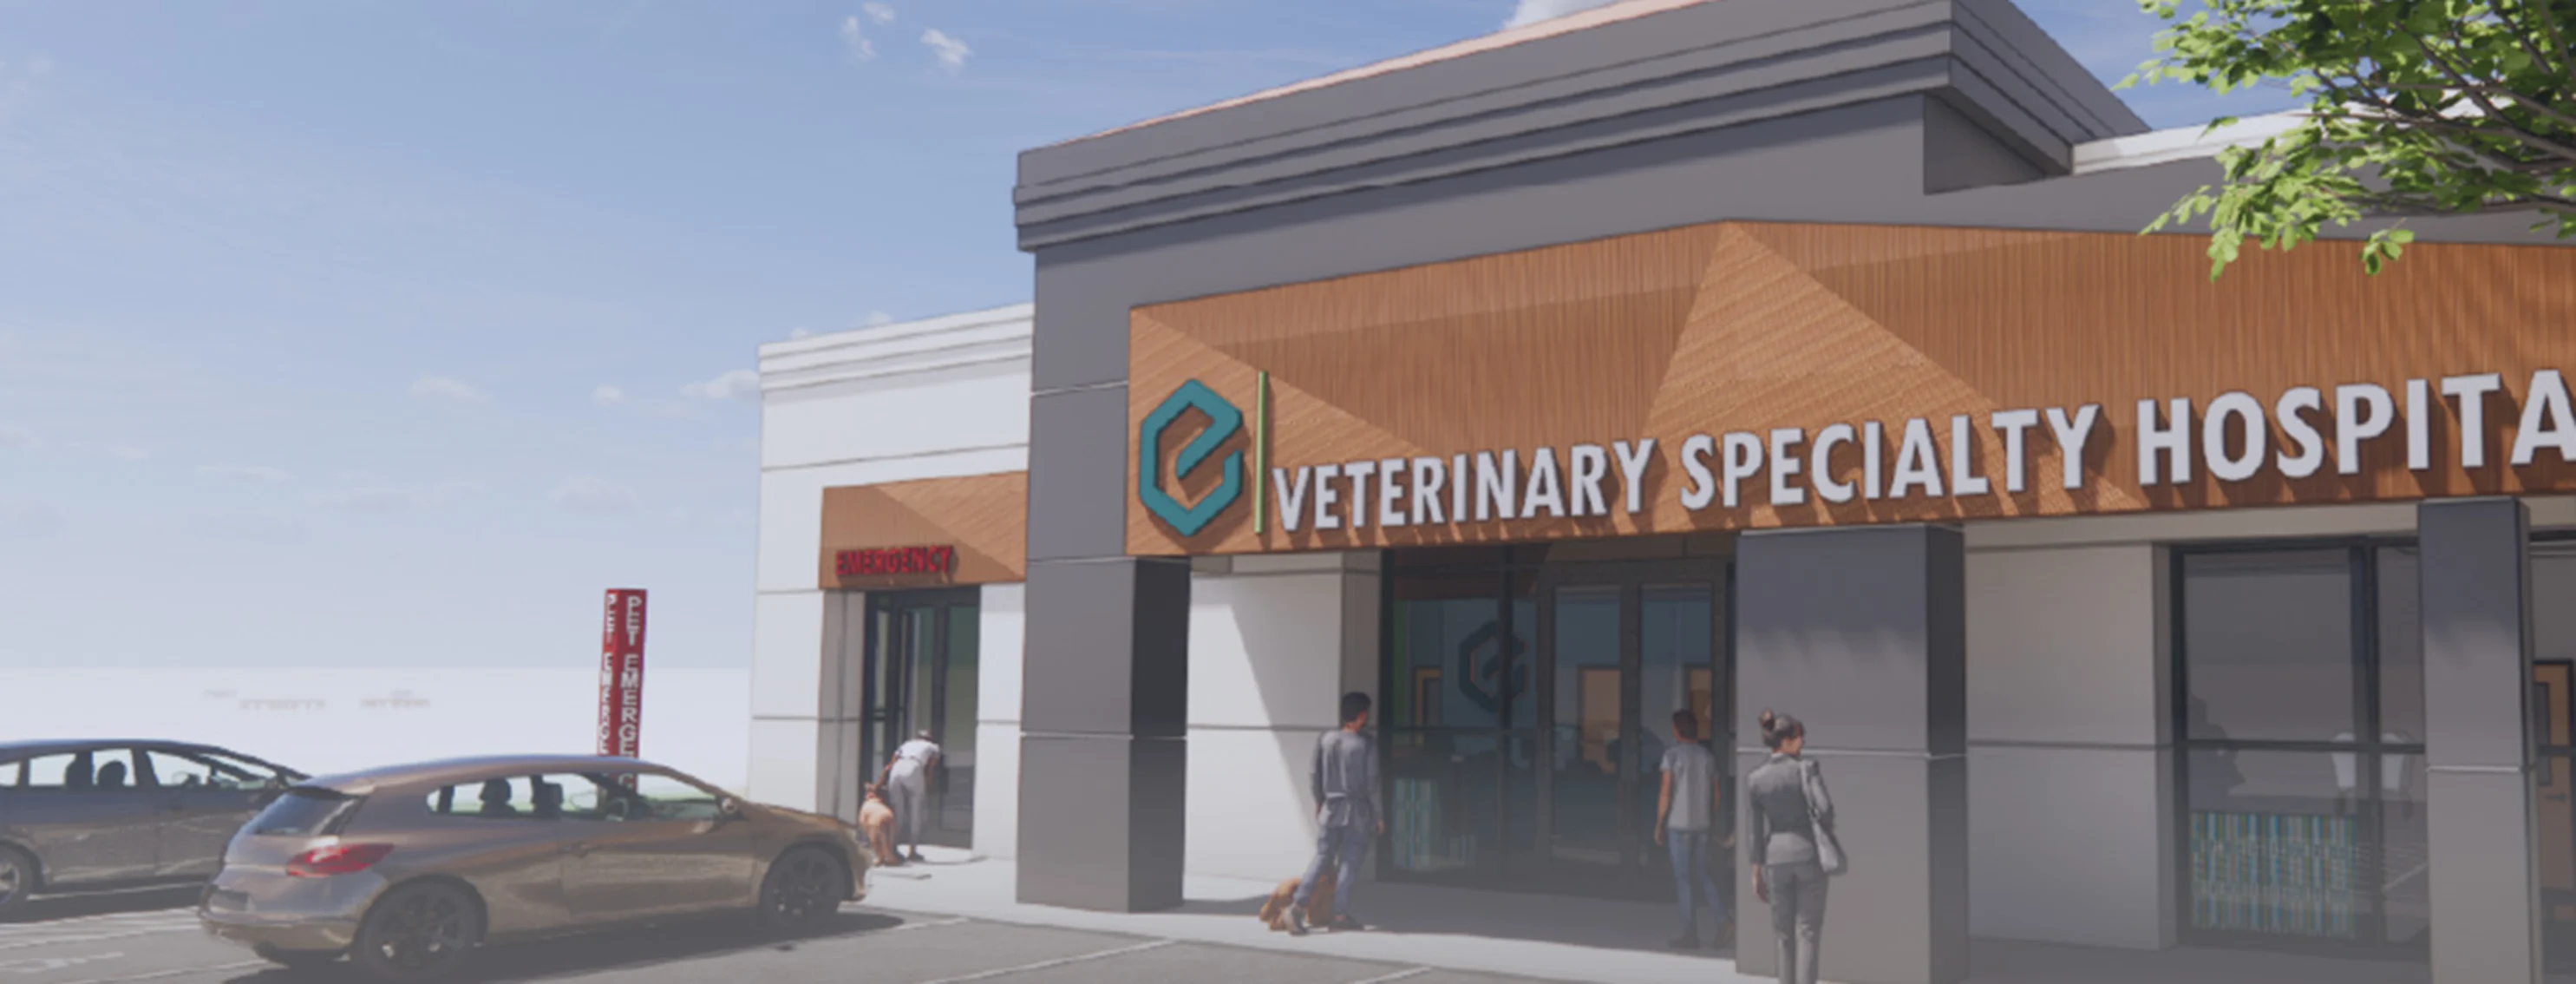 Rendering of Atlantic Street Veterinary Hospital's new facility